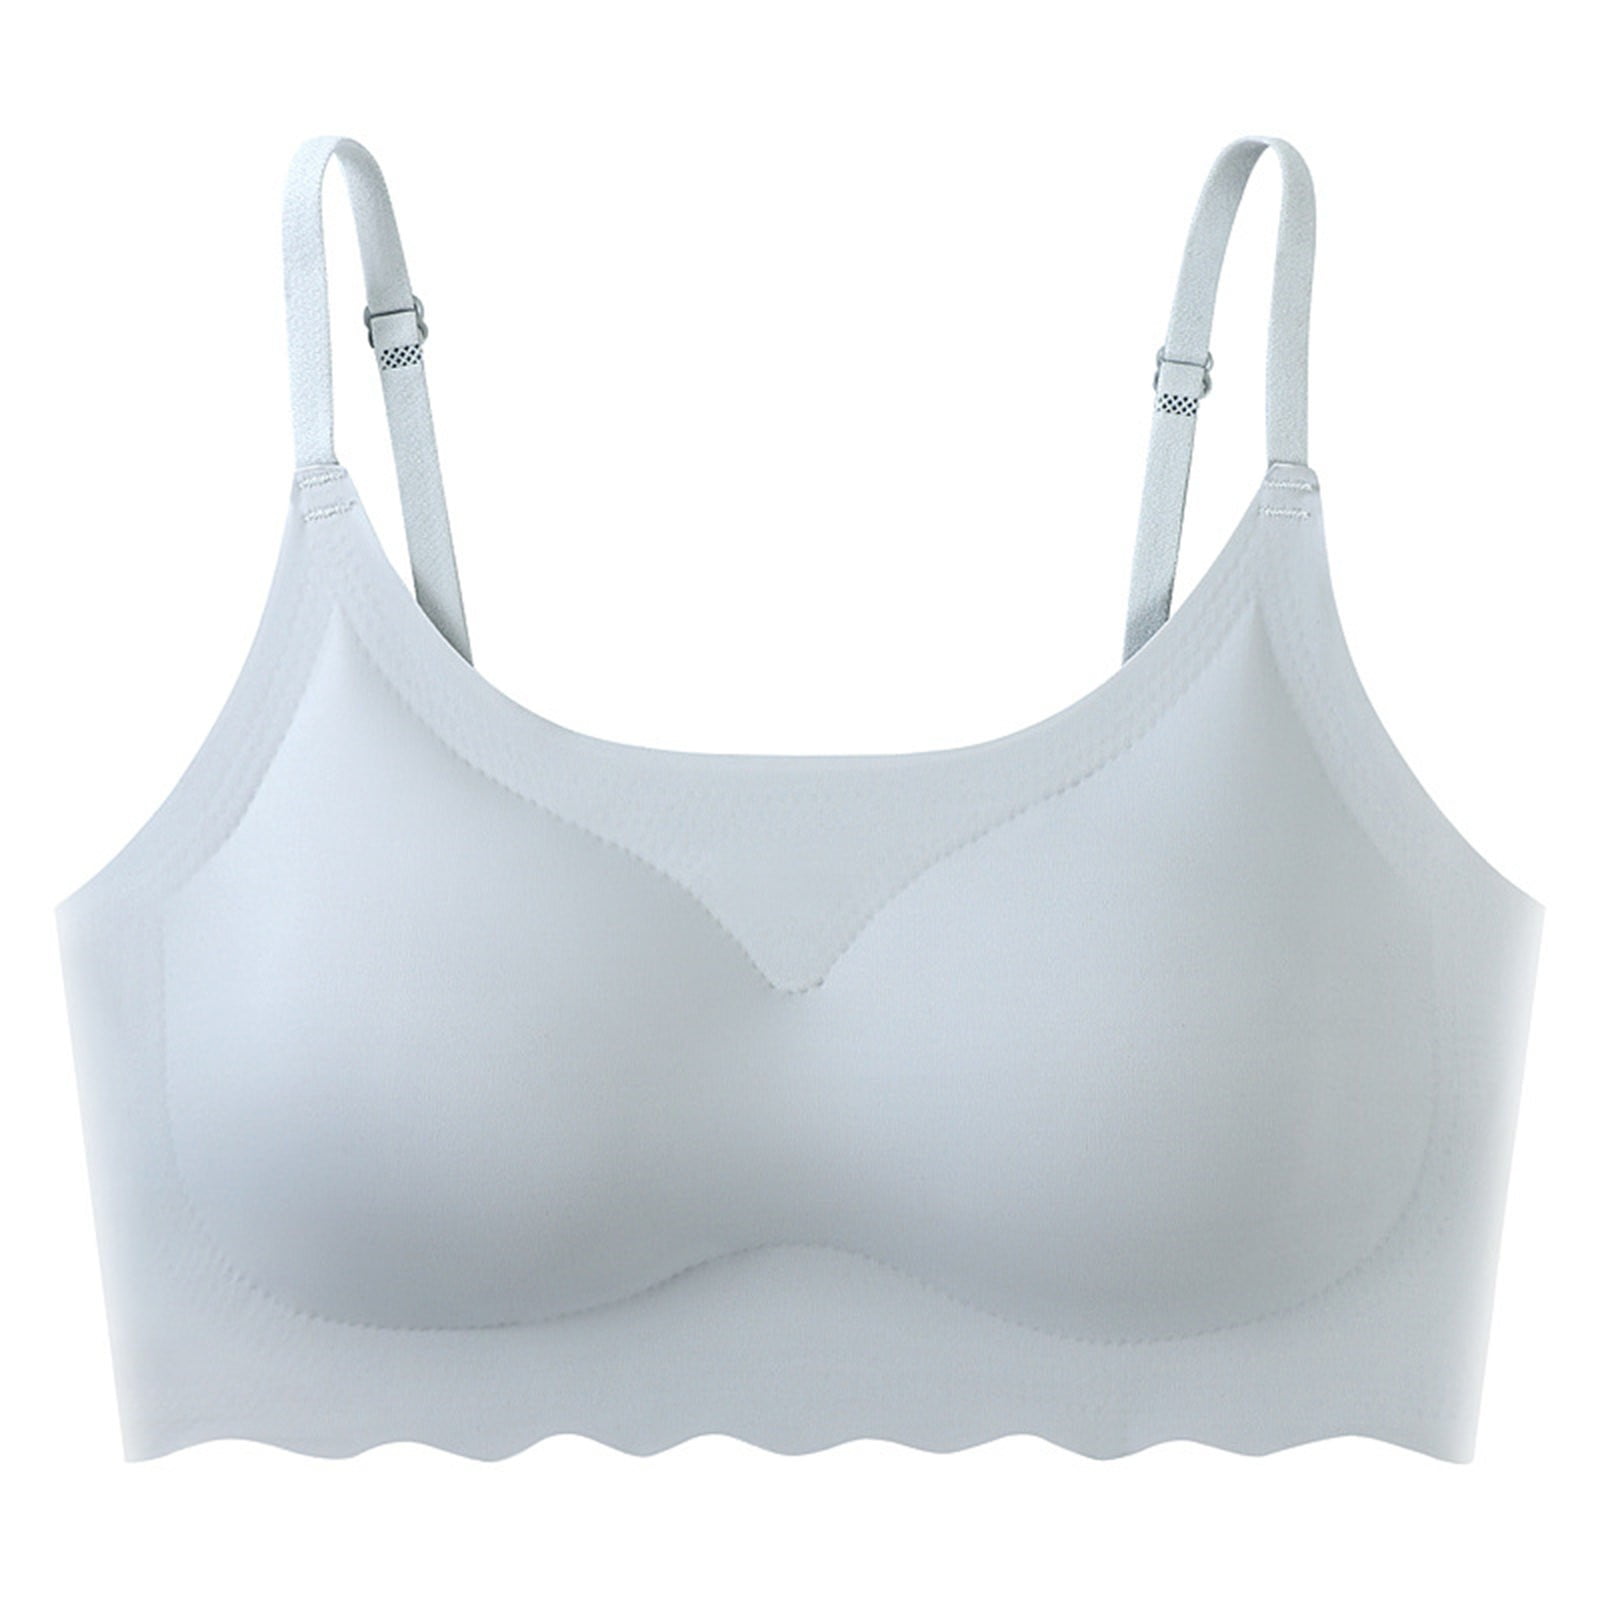 Folomi Sport Bra For Women Front Close Push Up Underwear Adjustable Fitness  Yoga Bra Wireless Bralette Size S To XL